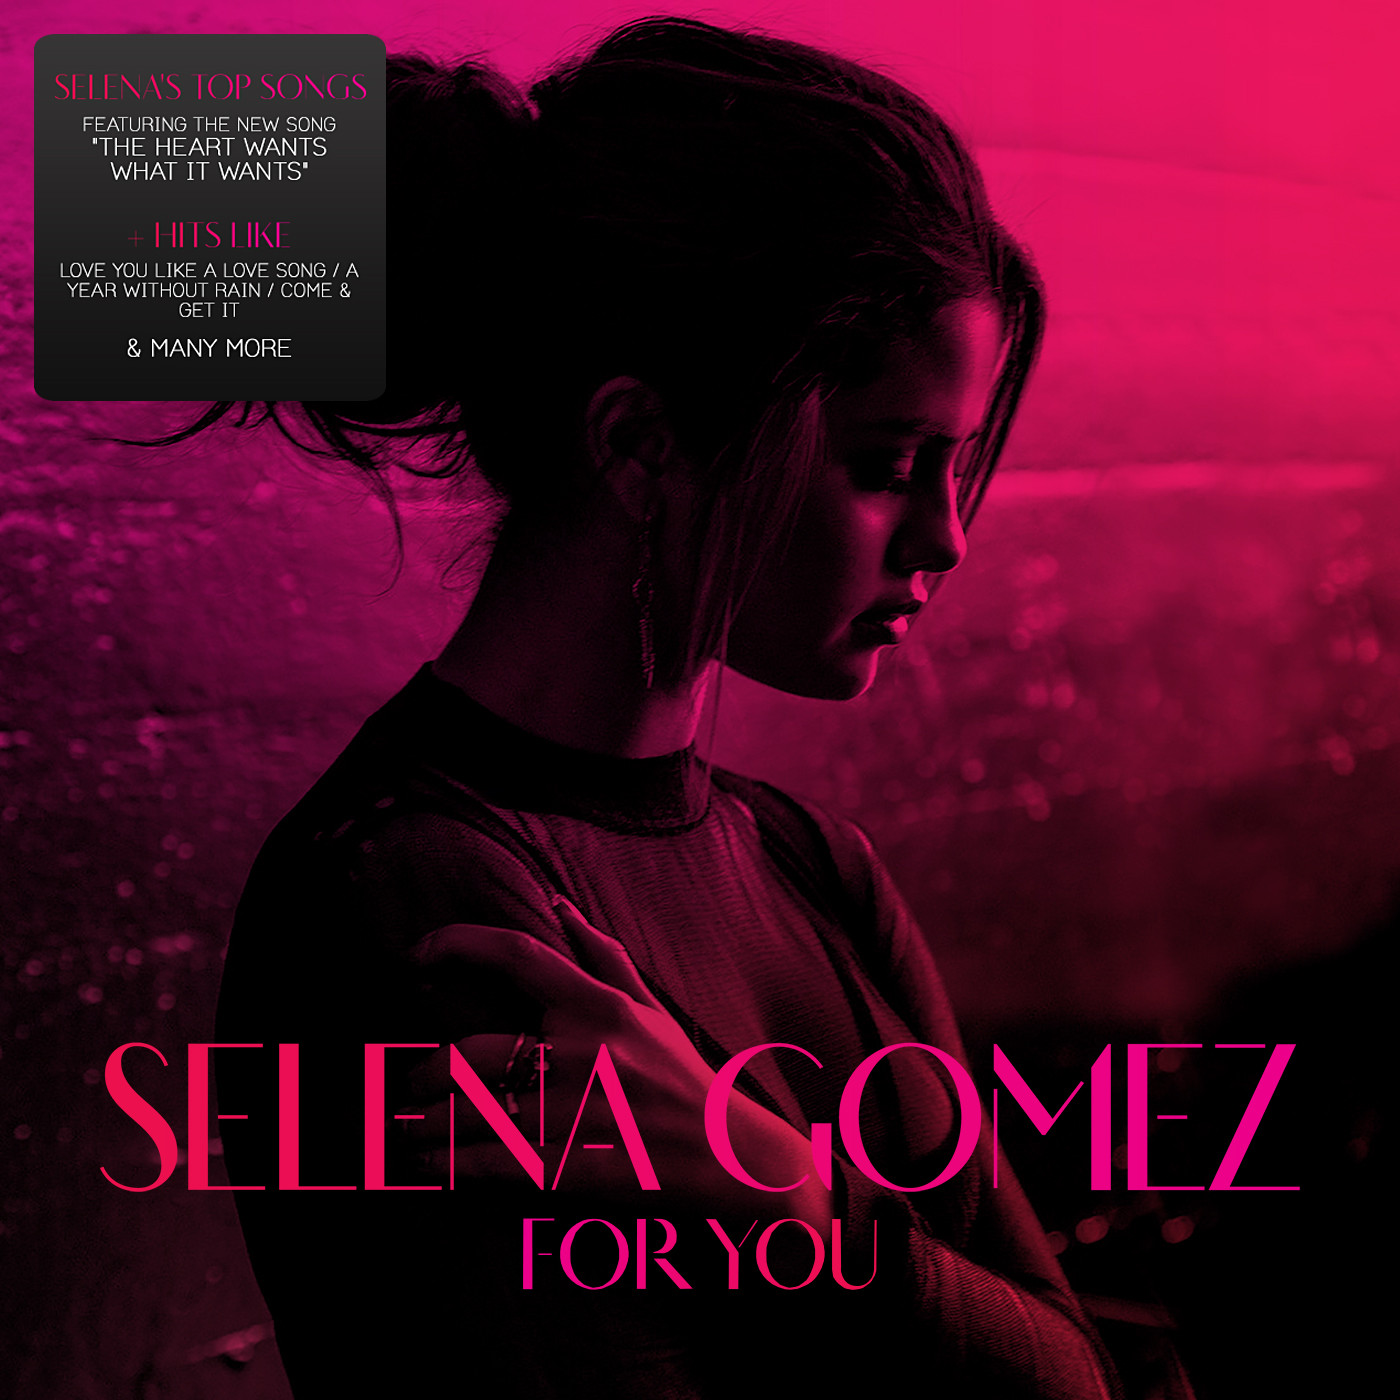 Selena Gomez for you.